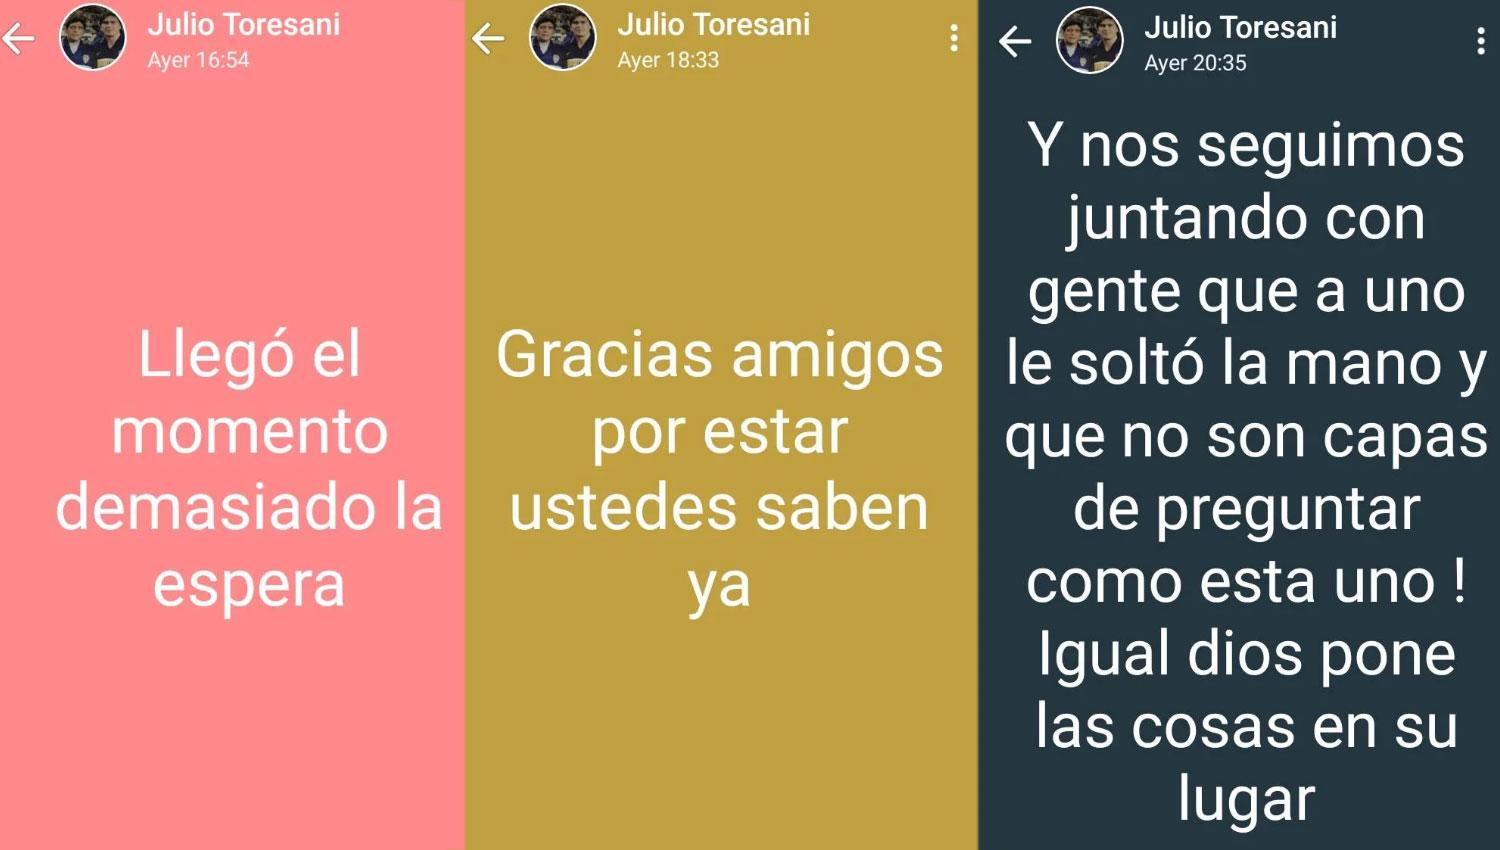 Los mensajes de Whatsapp de Julio César Toresani